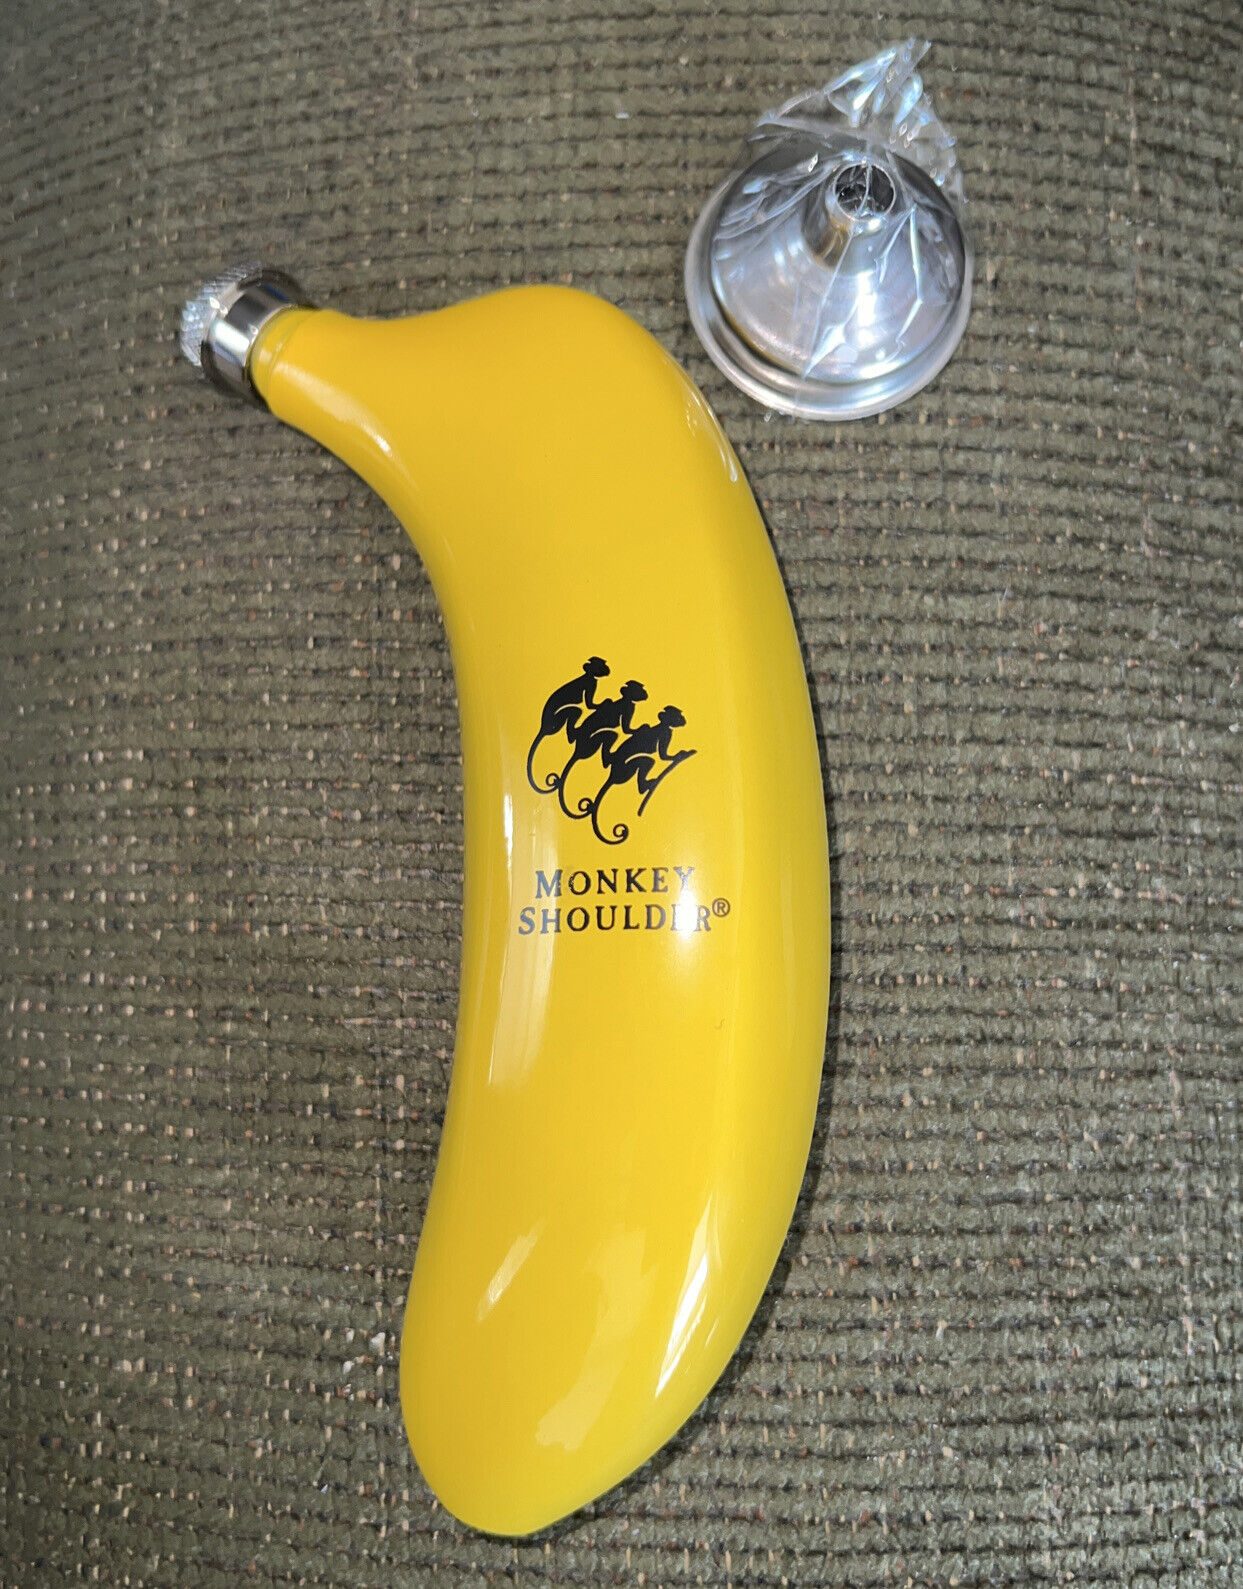 Monkey Shoulder Banana Liquor Flask.  “very unique “  USA w/funnel